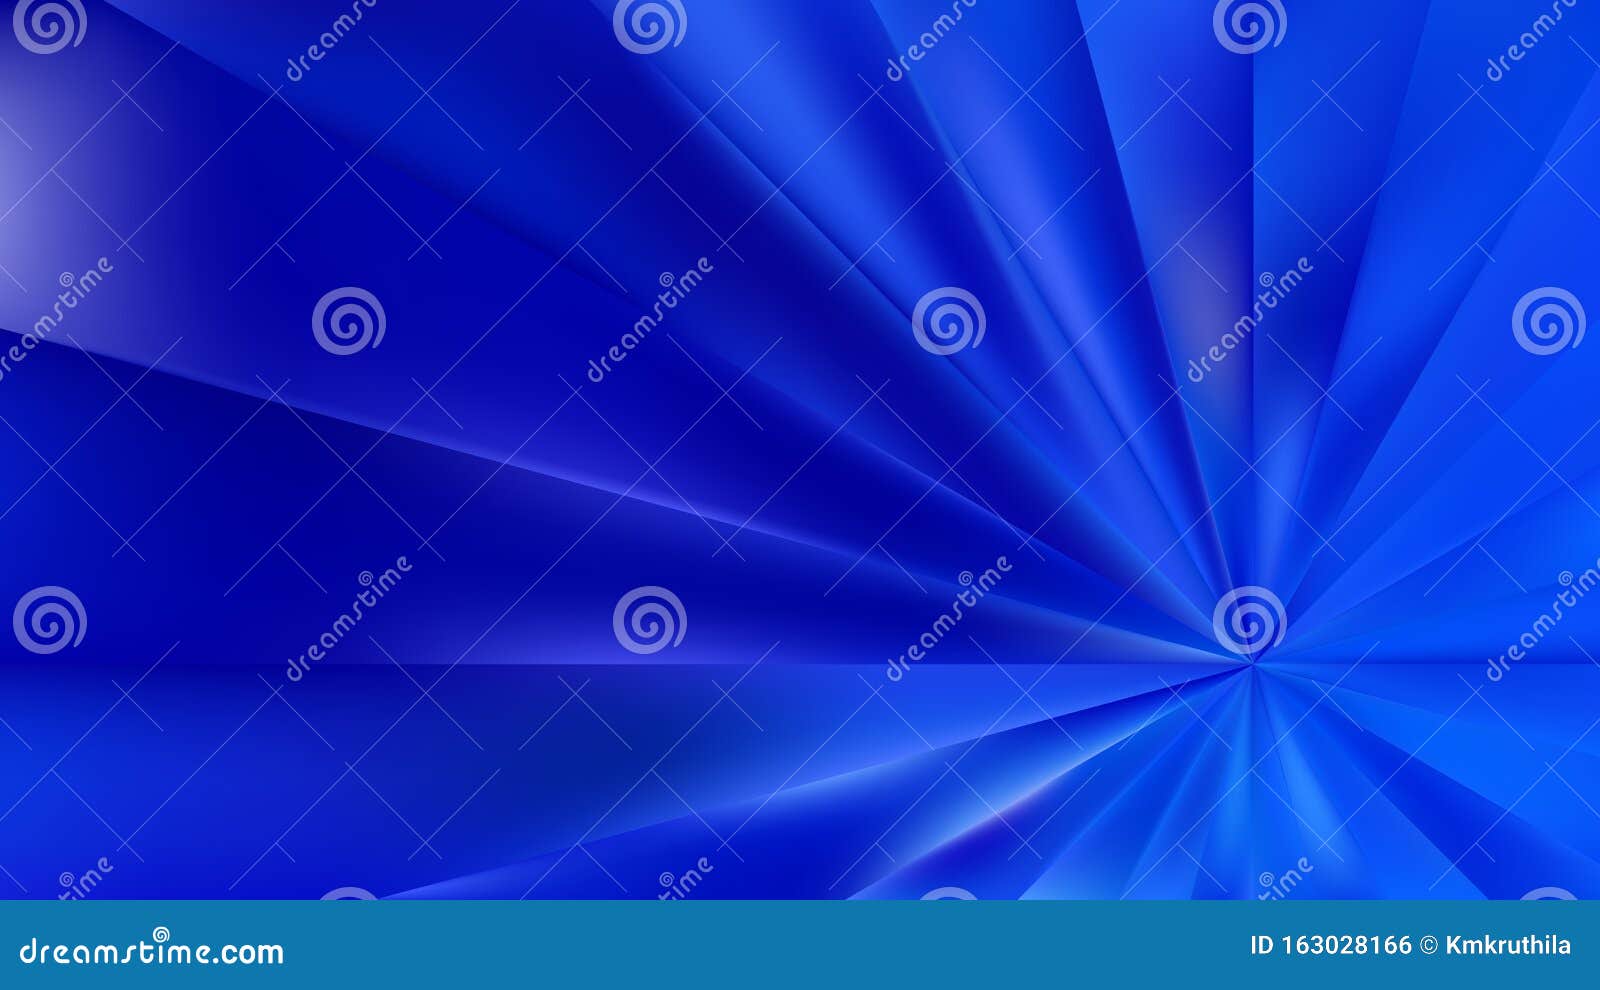 38,763 Royal Blue Background Stock Photos - Free & Royalty-Free